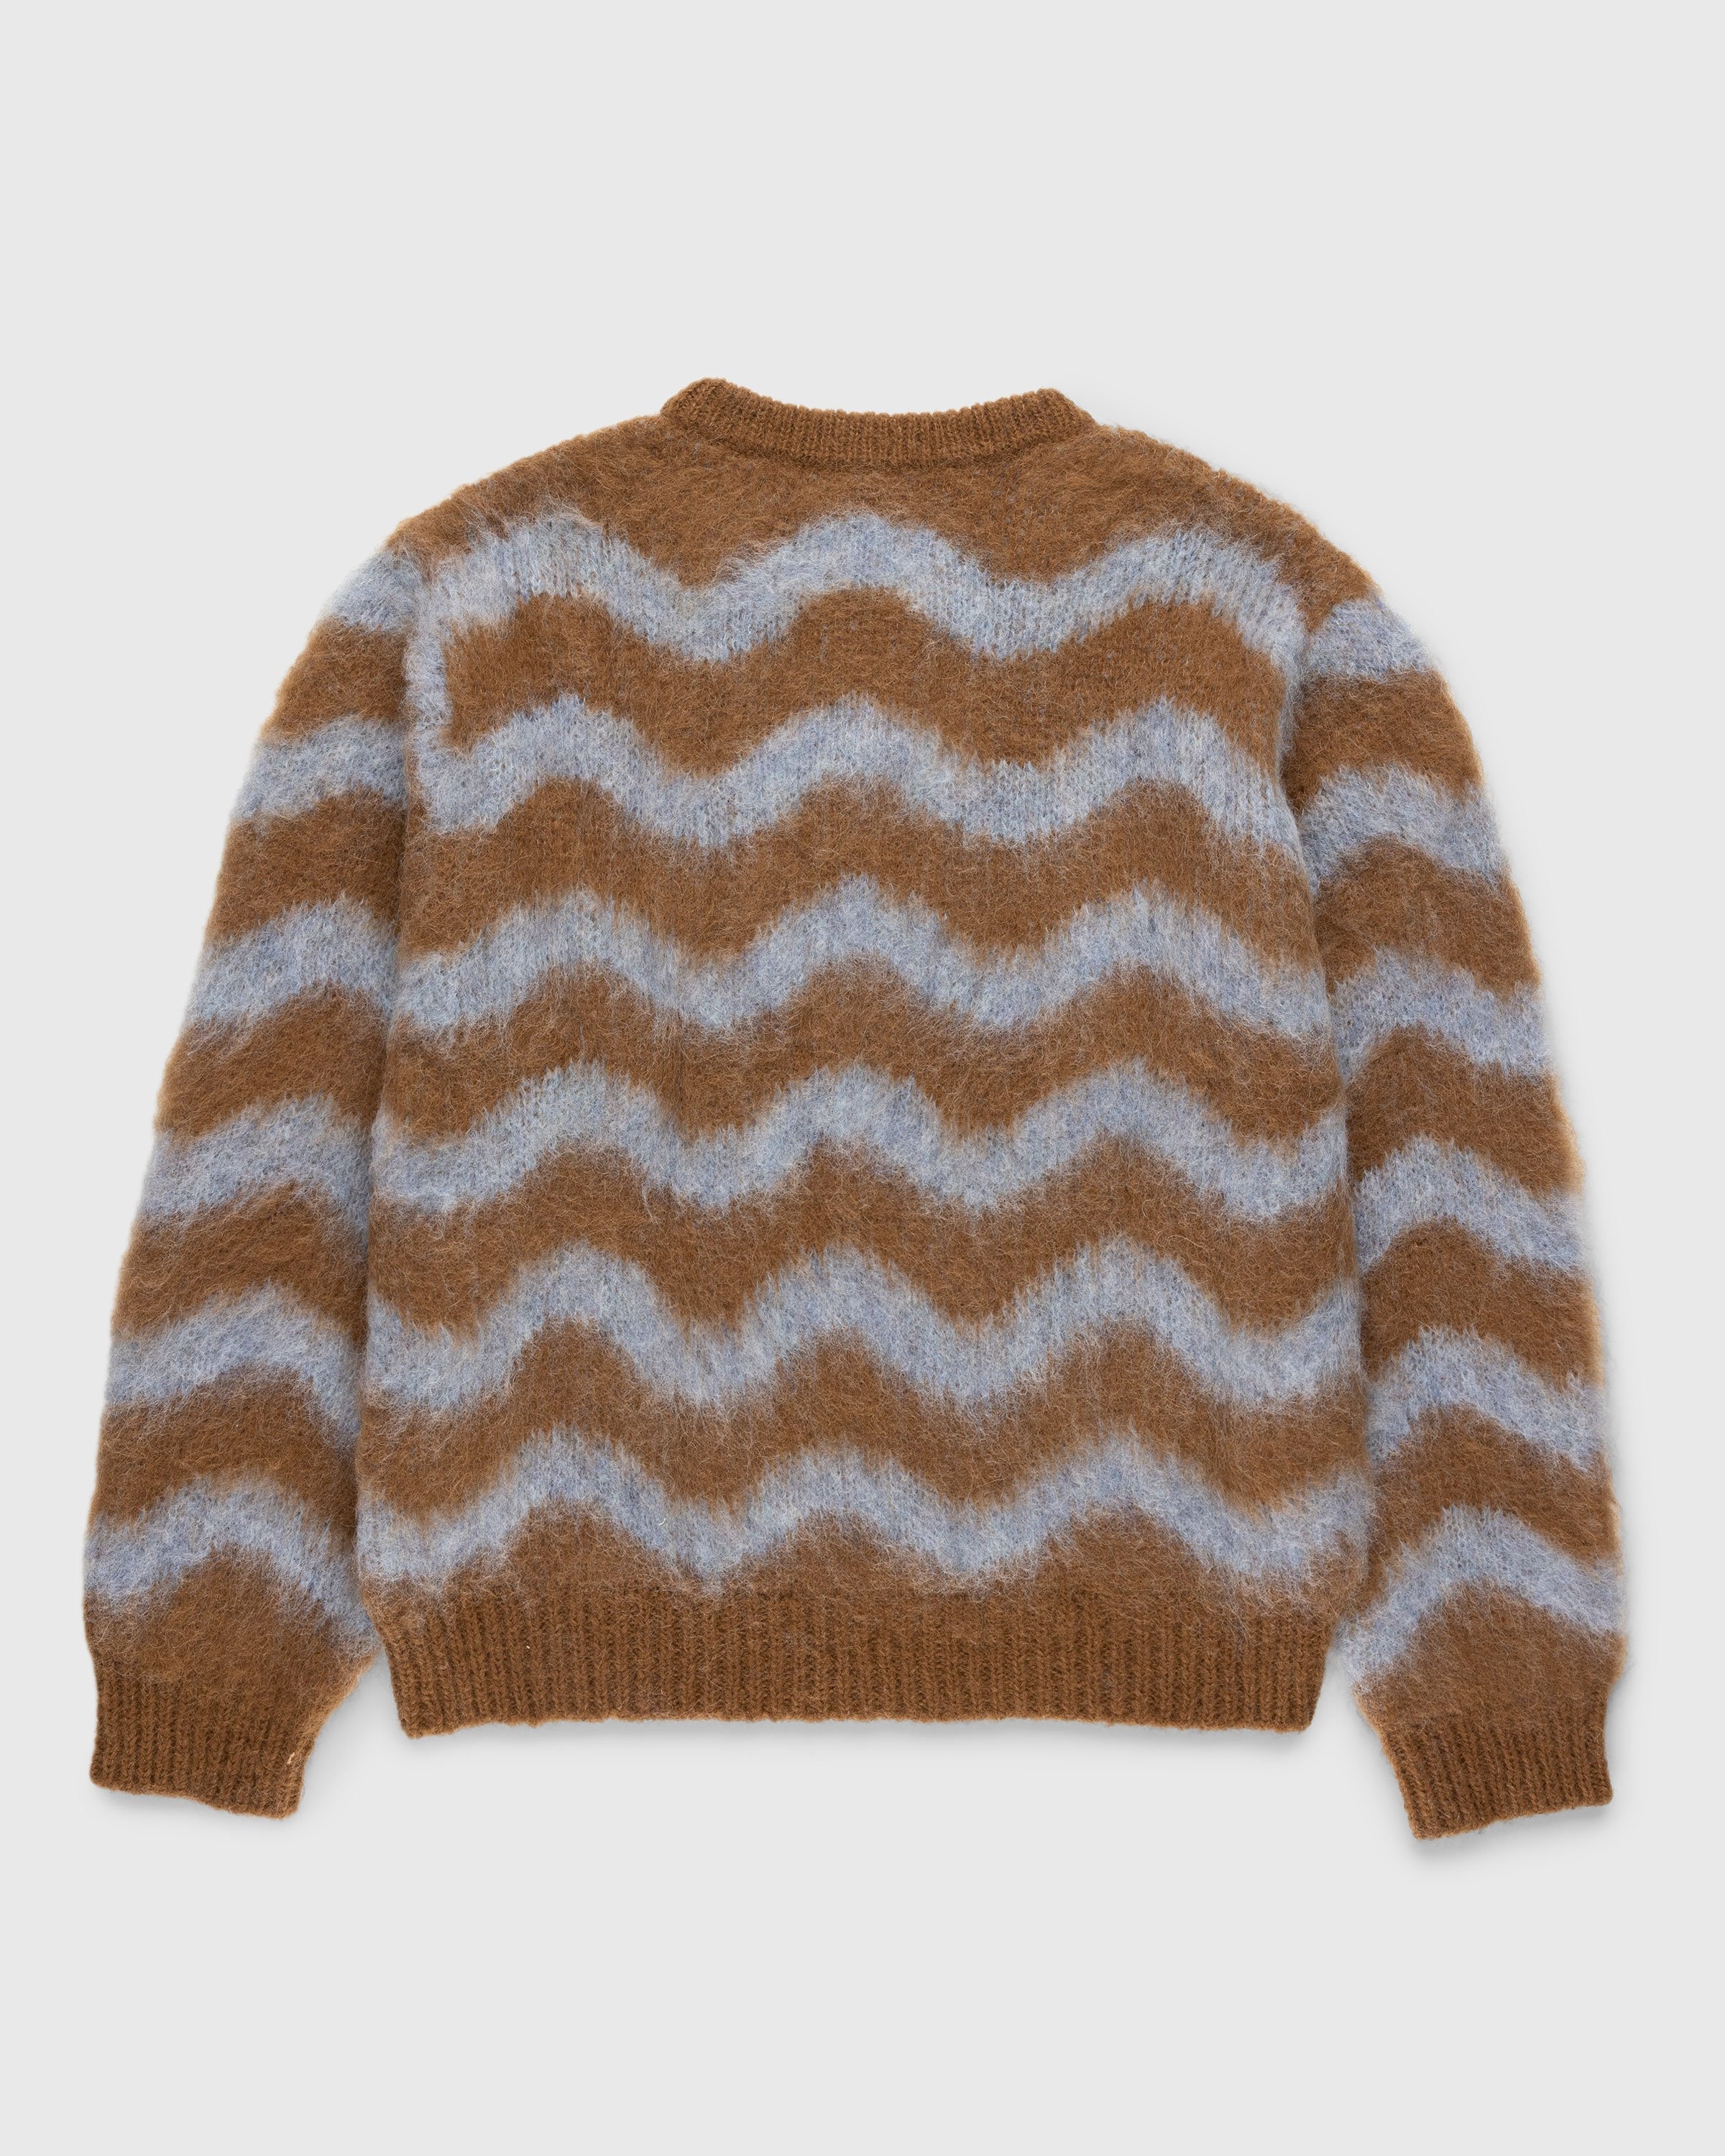 Highsnobiety HS05 - Alpaca Fuzzy Wave Sweater Light Blue/Brown - Clothing - Multi - Image 2